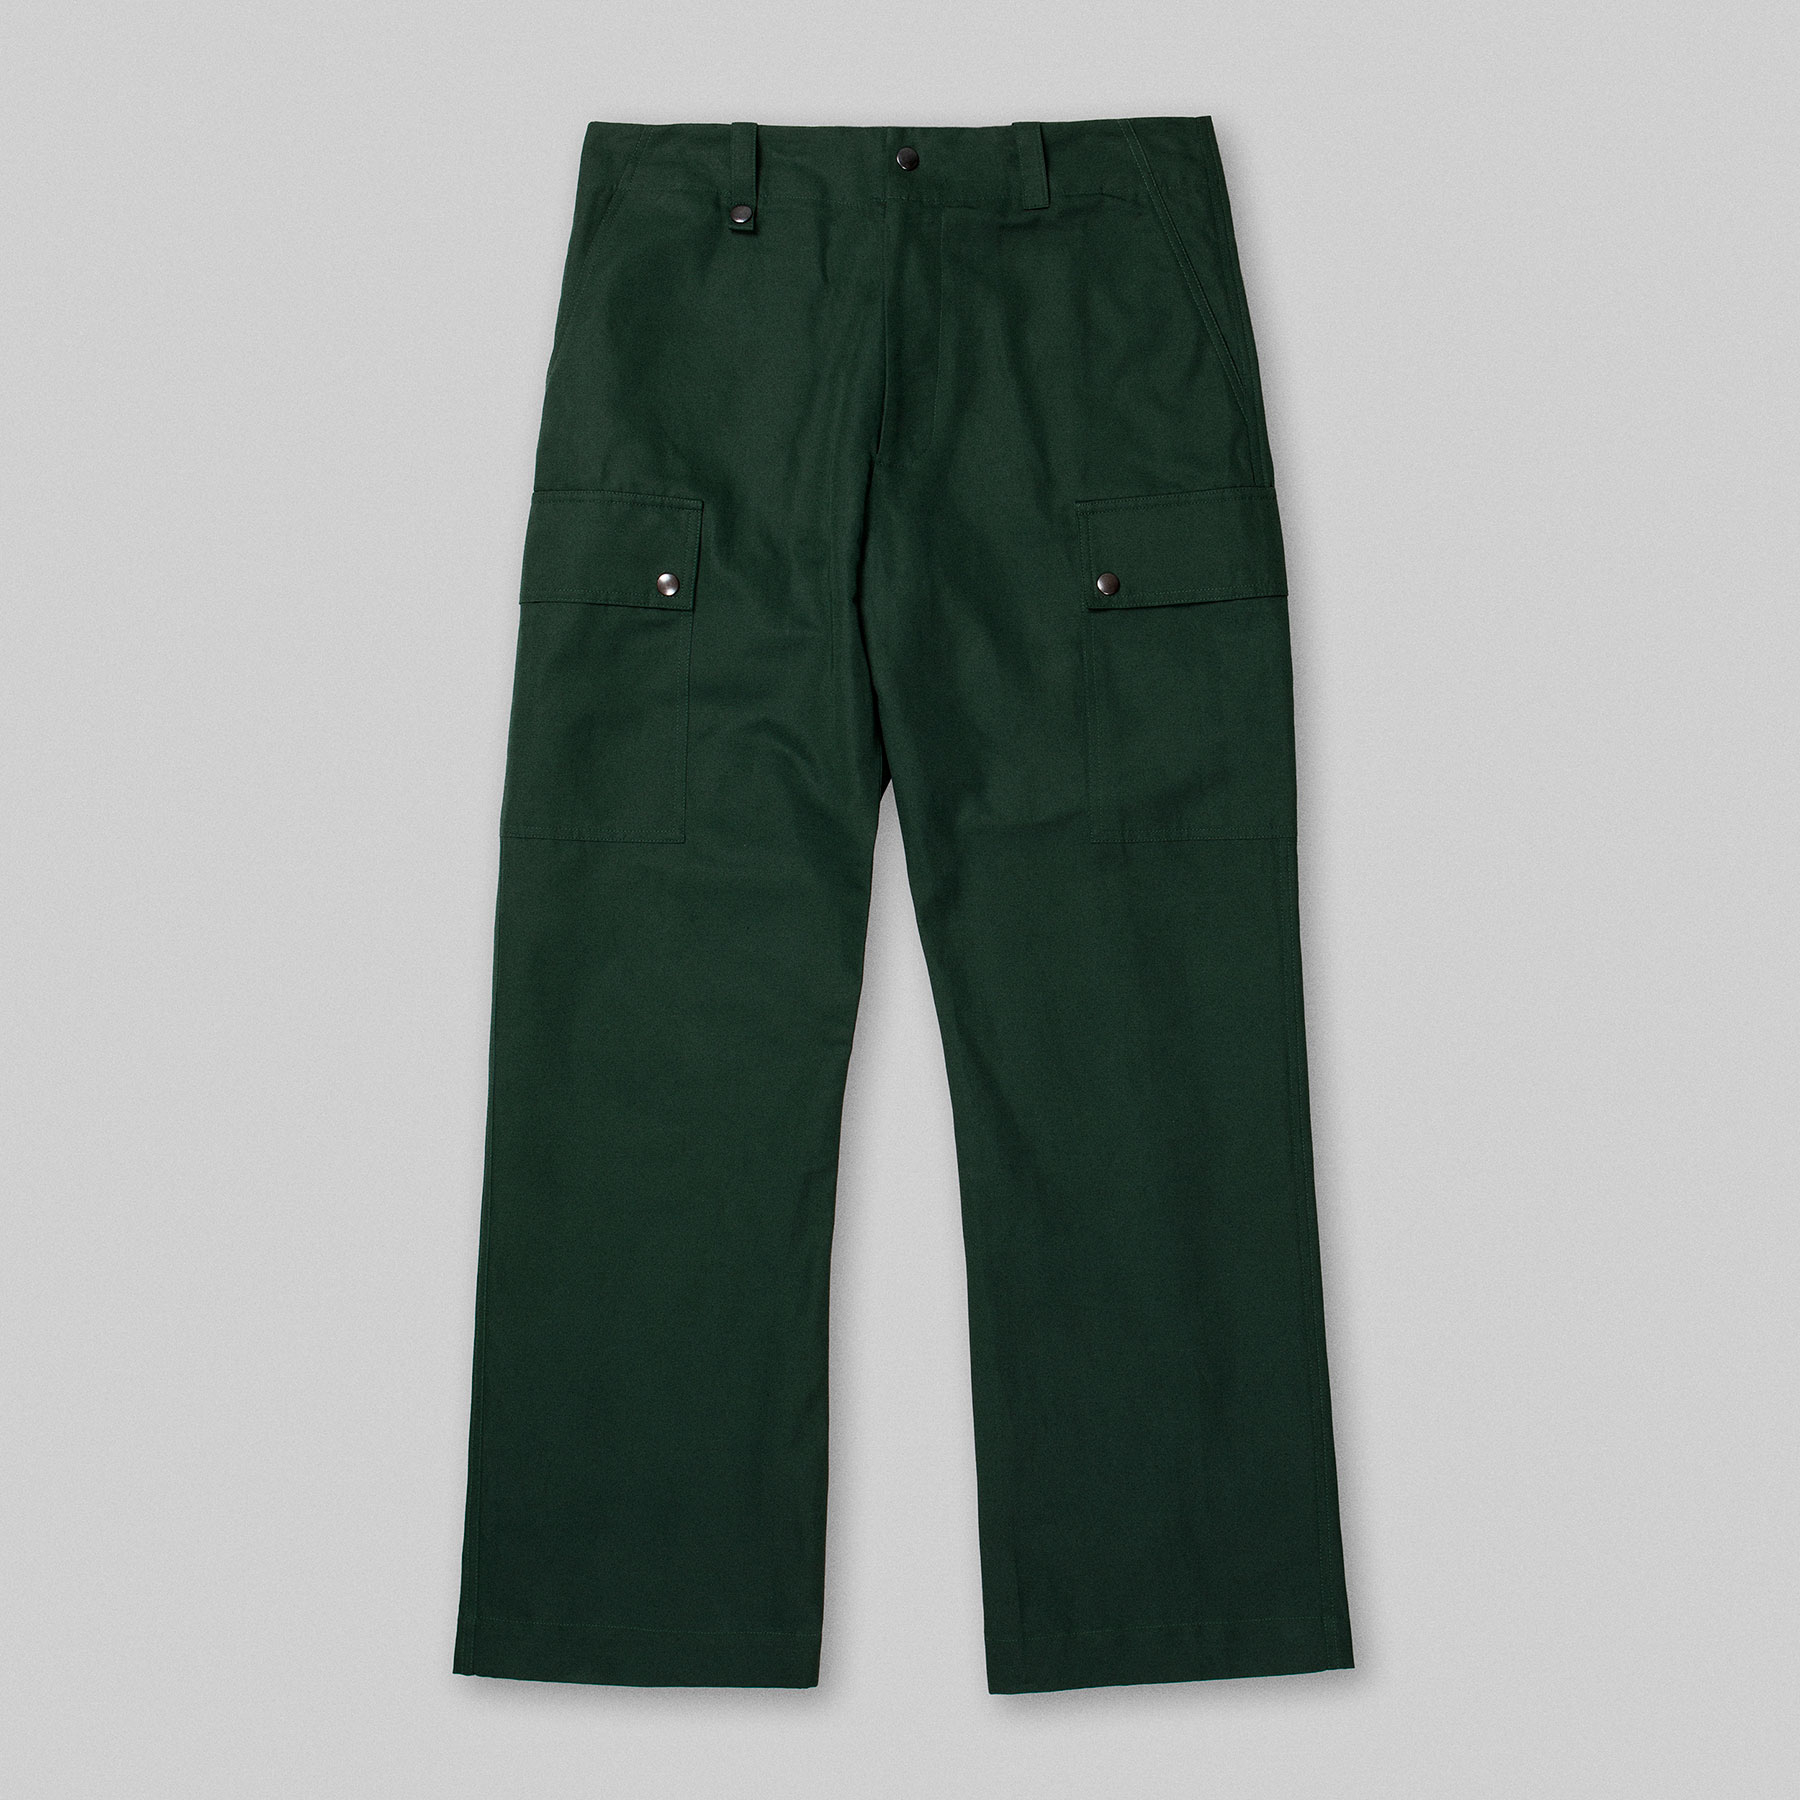 DECK Pants by Arpenteur in Green color